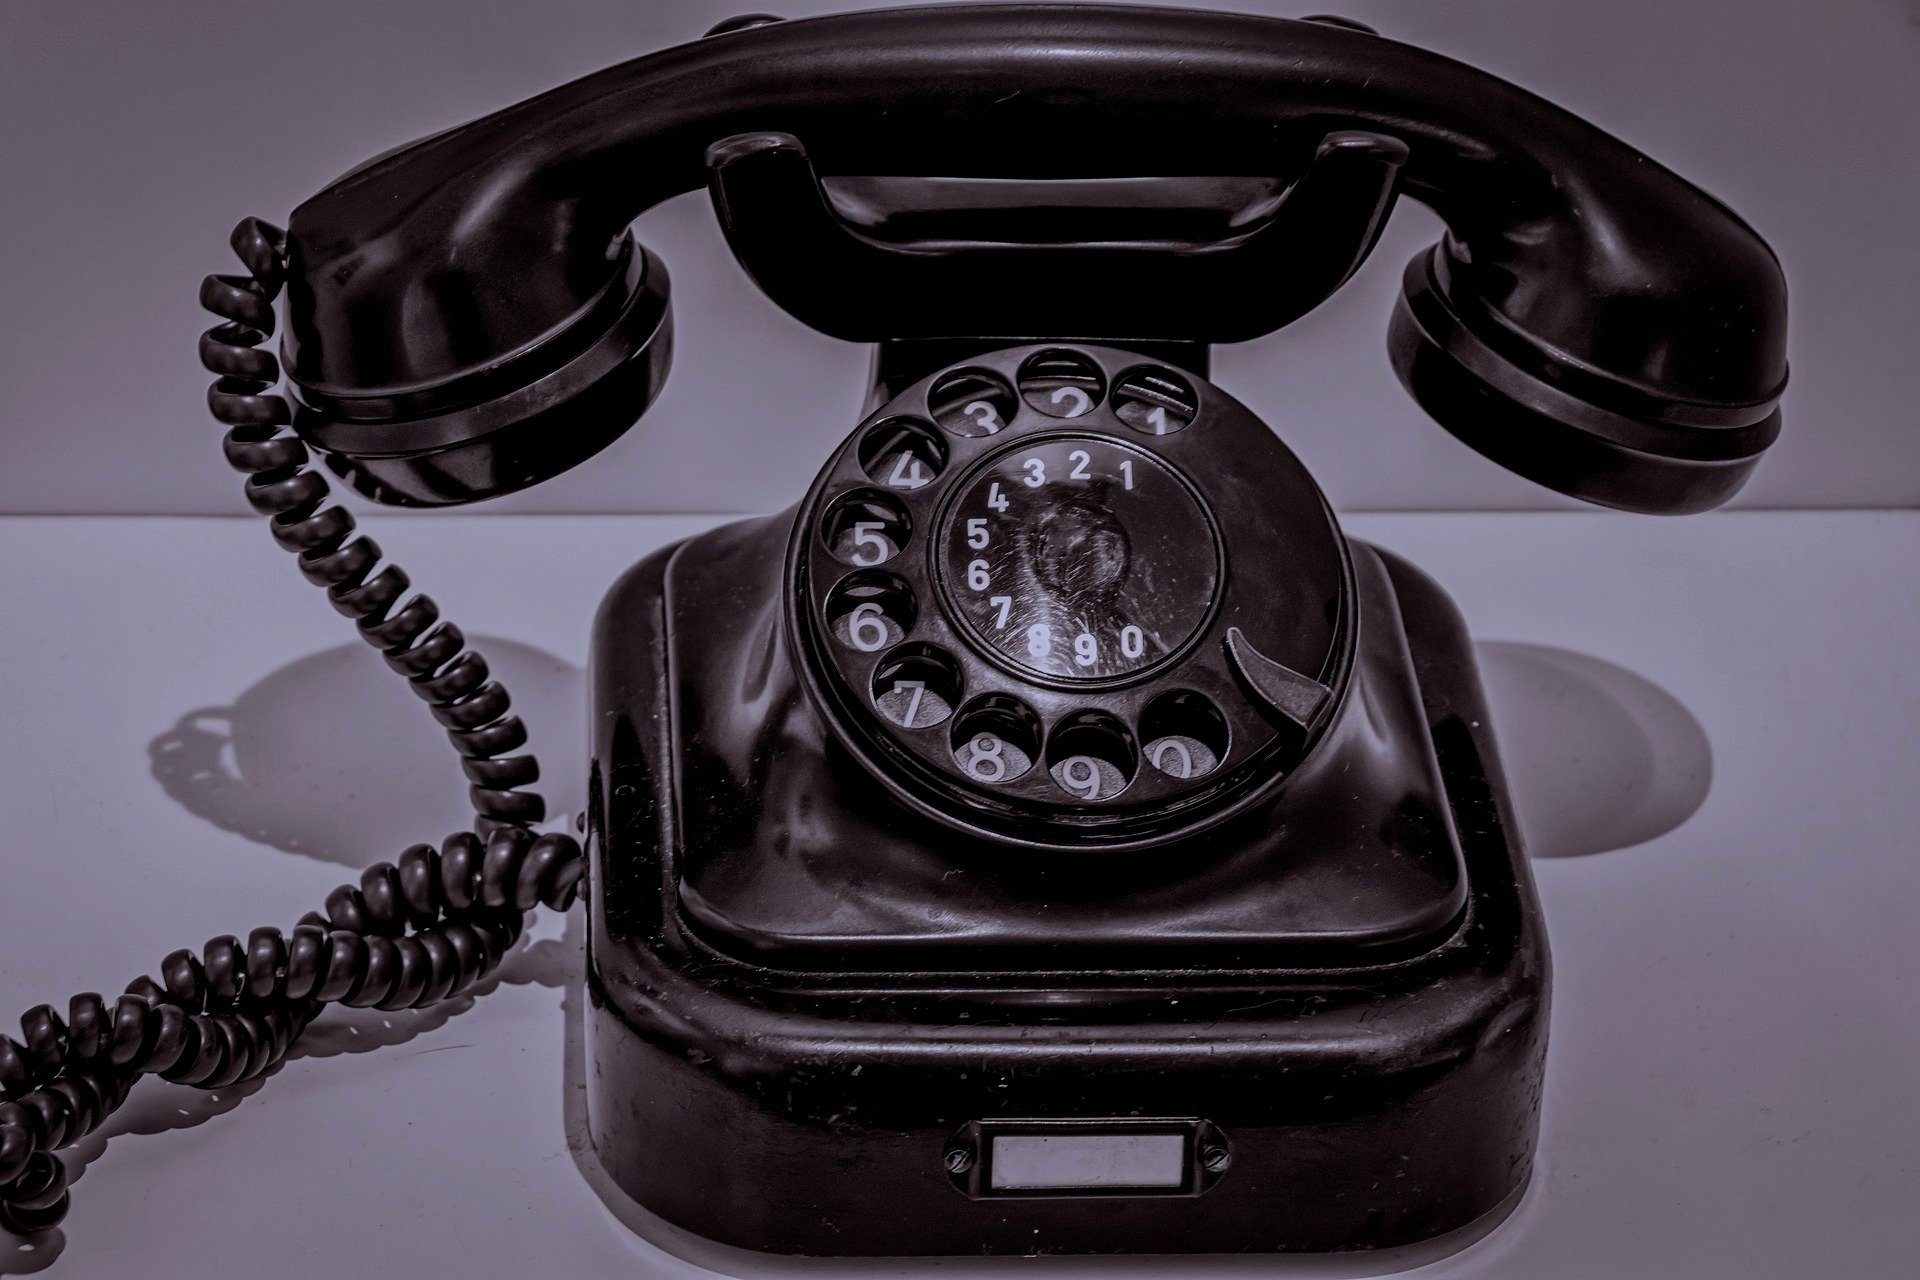 Рингтон советский телефон. Старый телефон. Старинный телефон. Старый телефонный аппарат. Телефон с циферблатом.